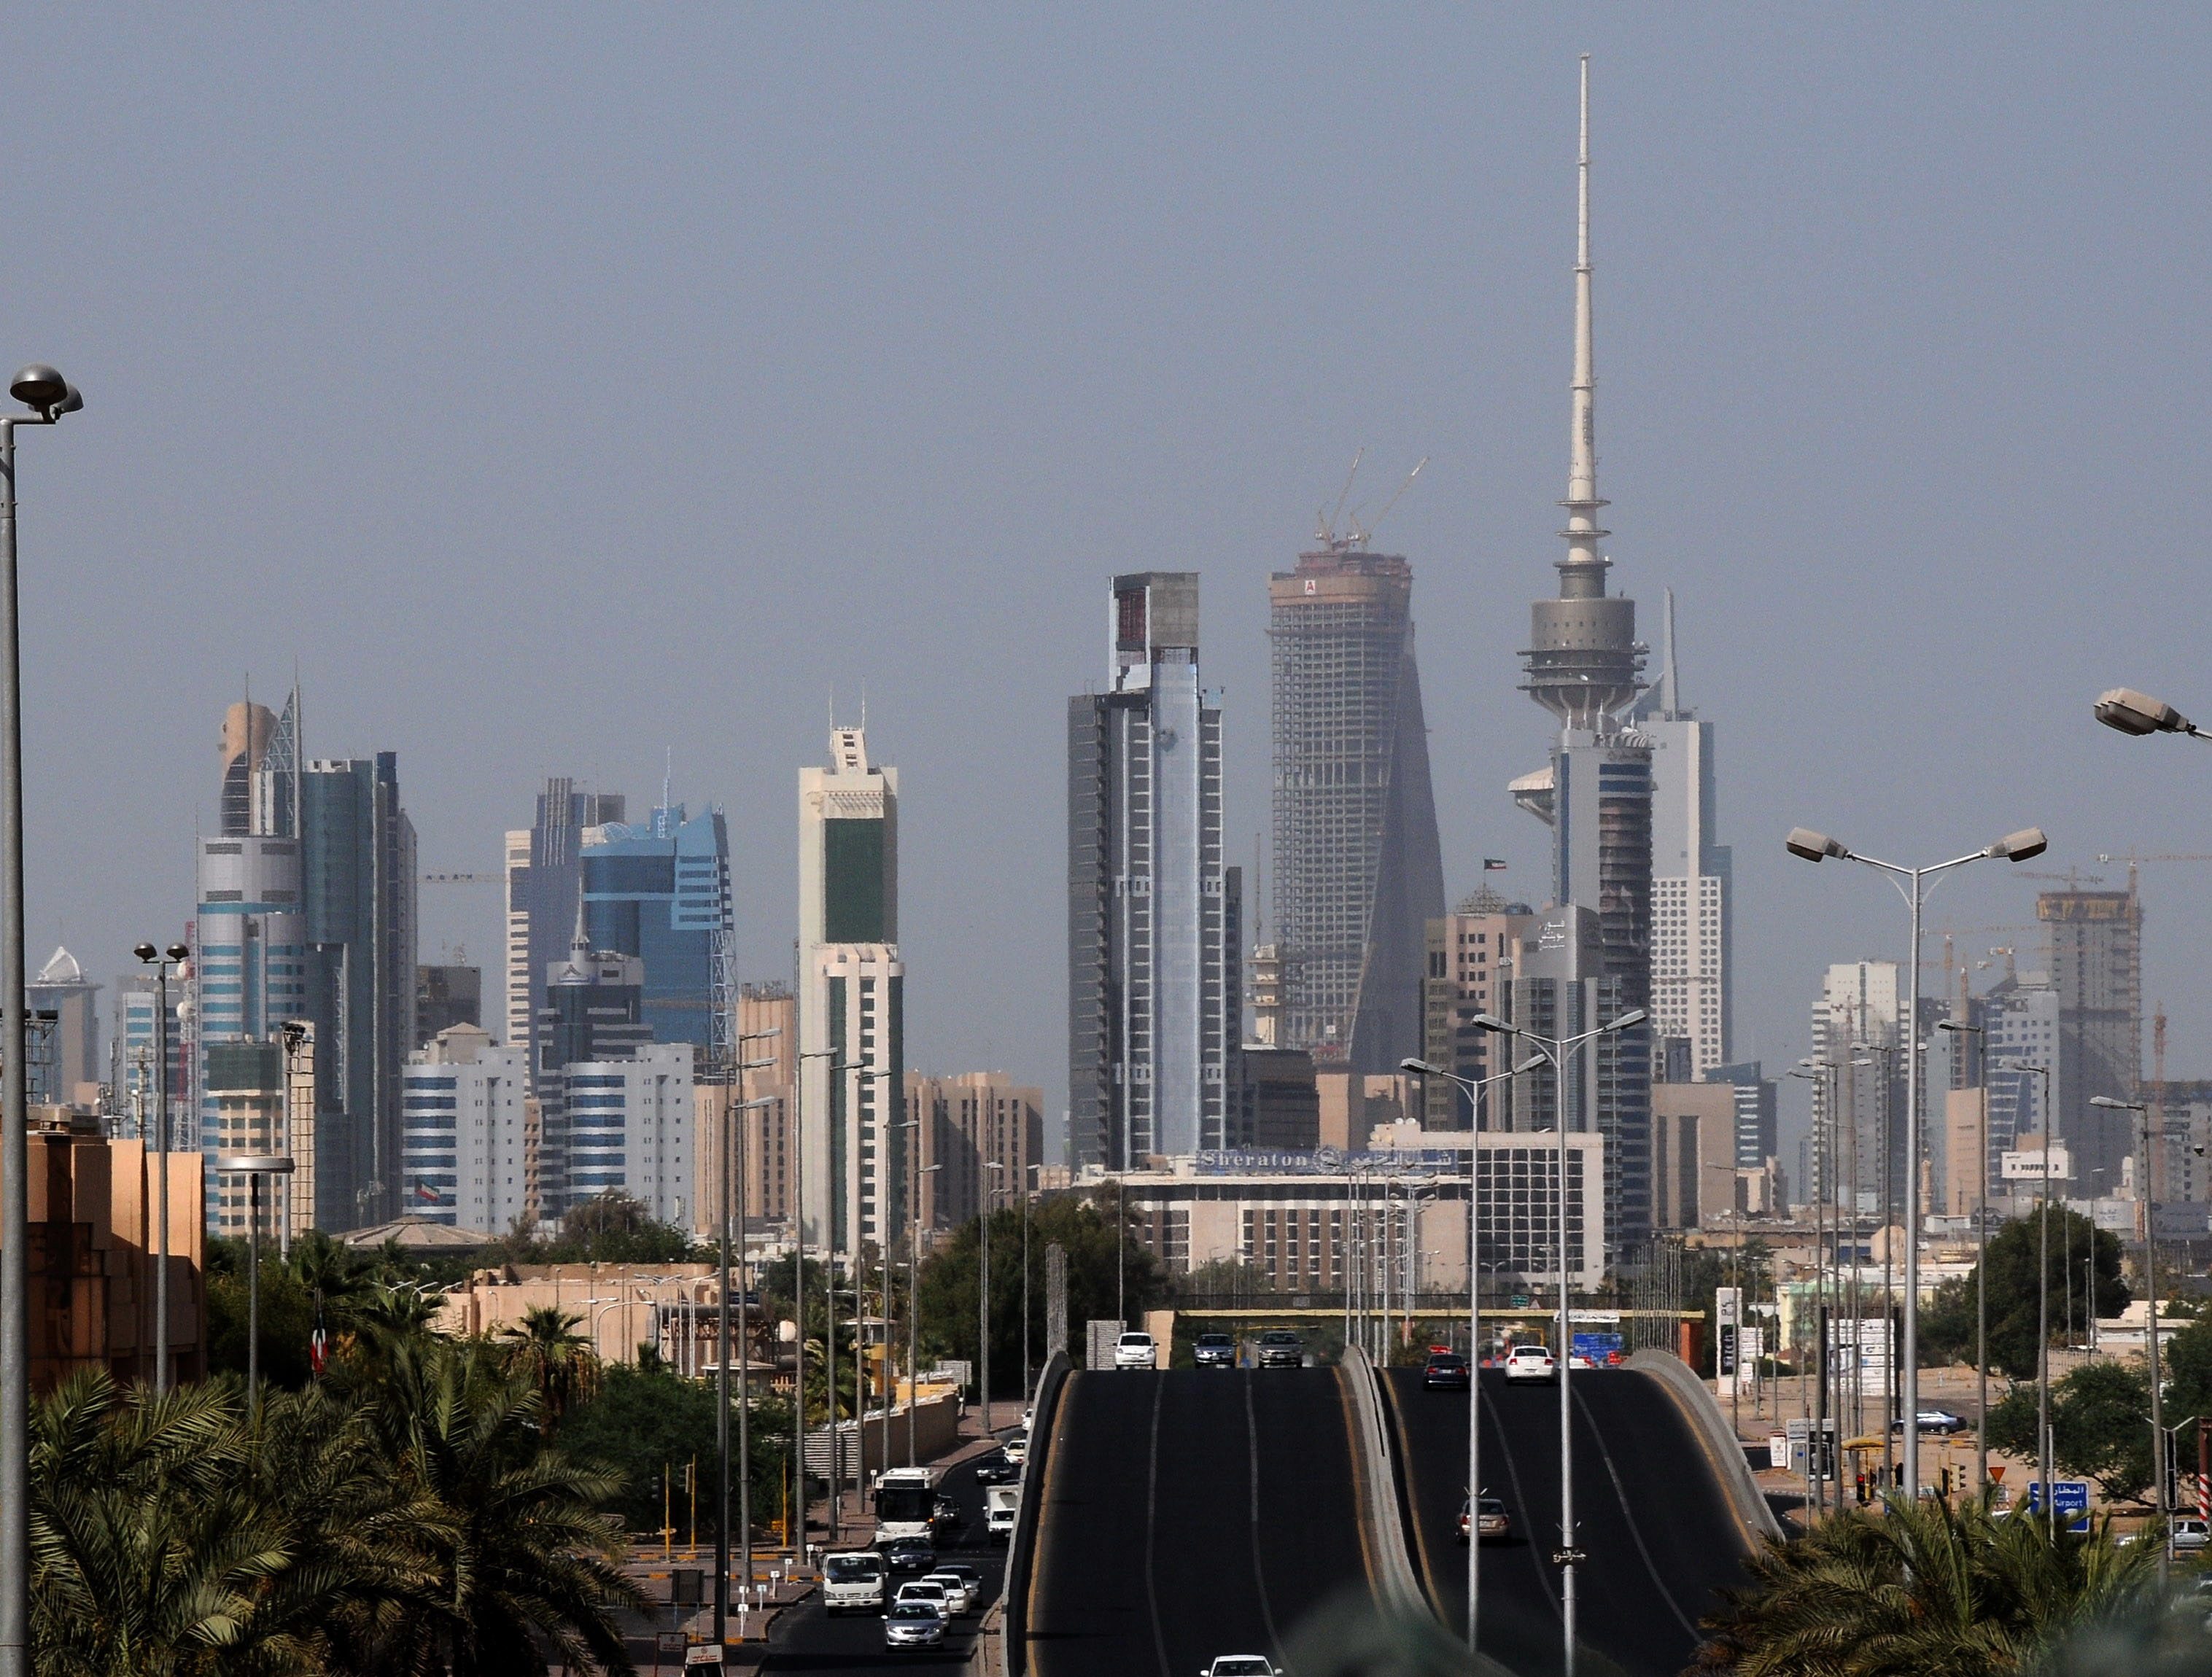 The Kuwait City skyline in 2009.